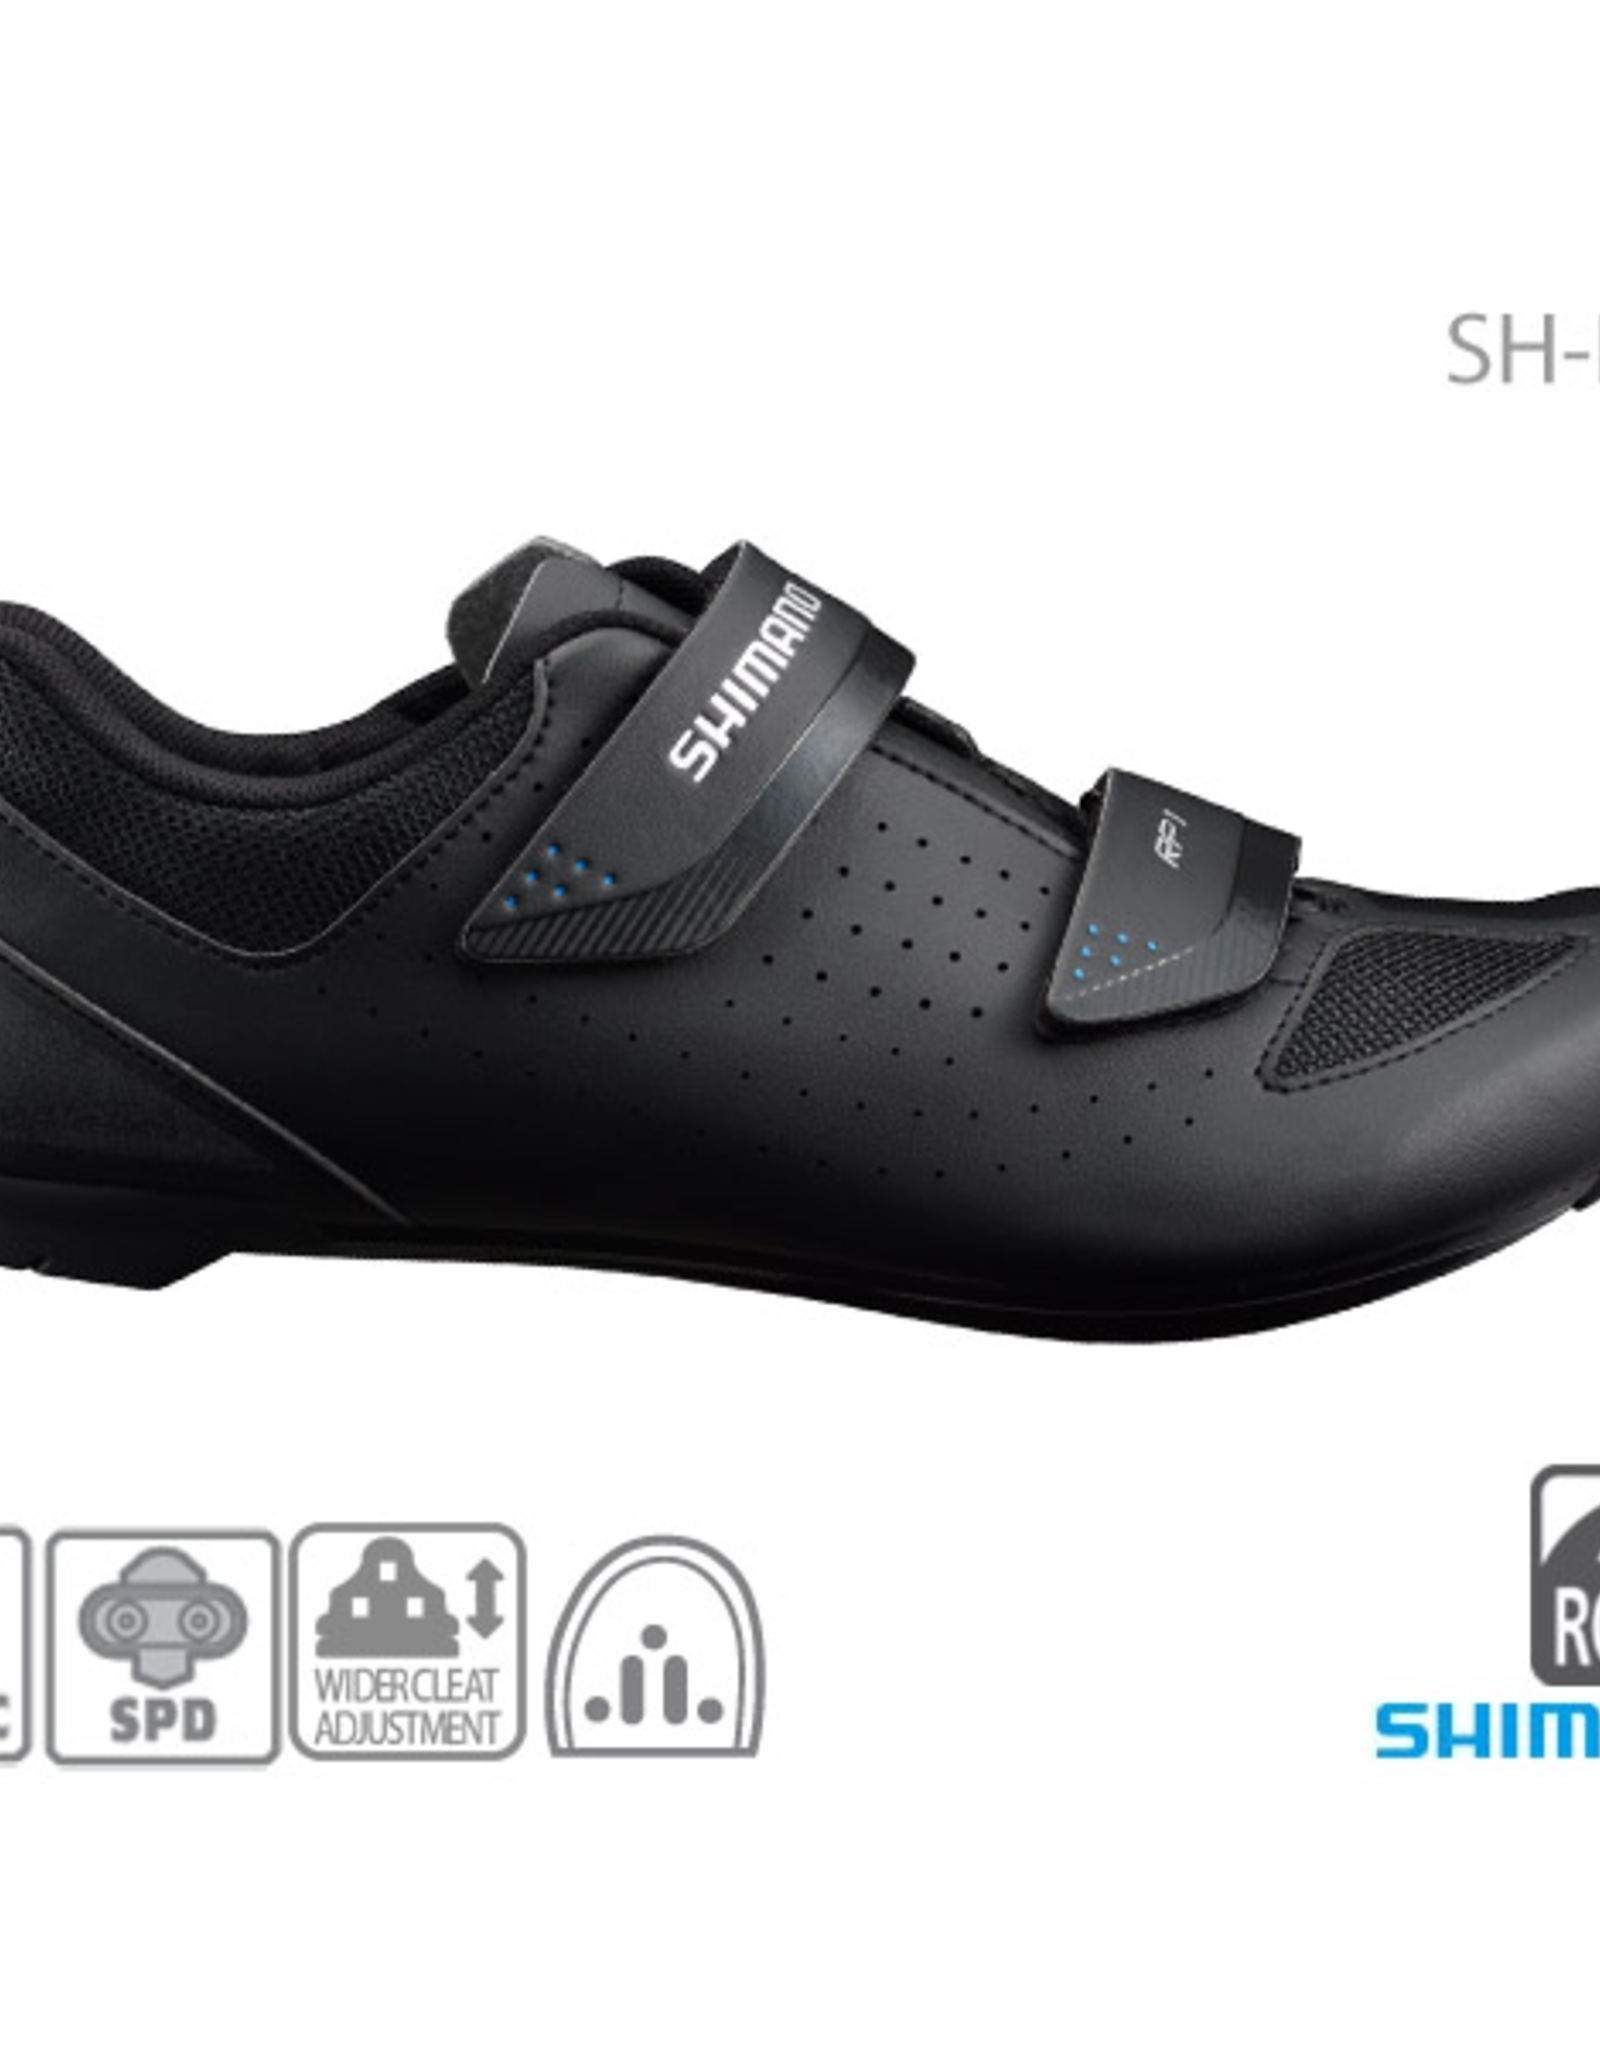 shimano rp100 road shoe